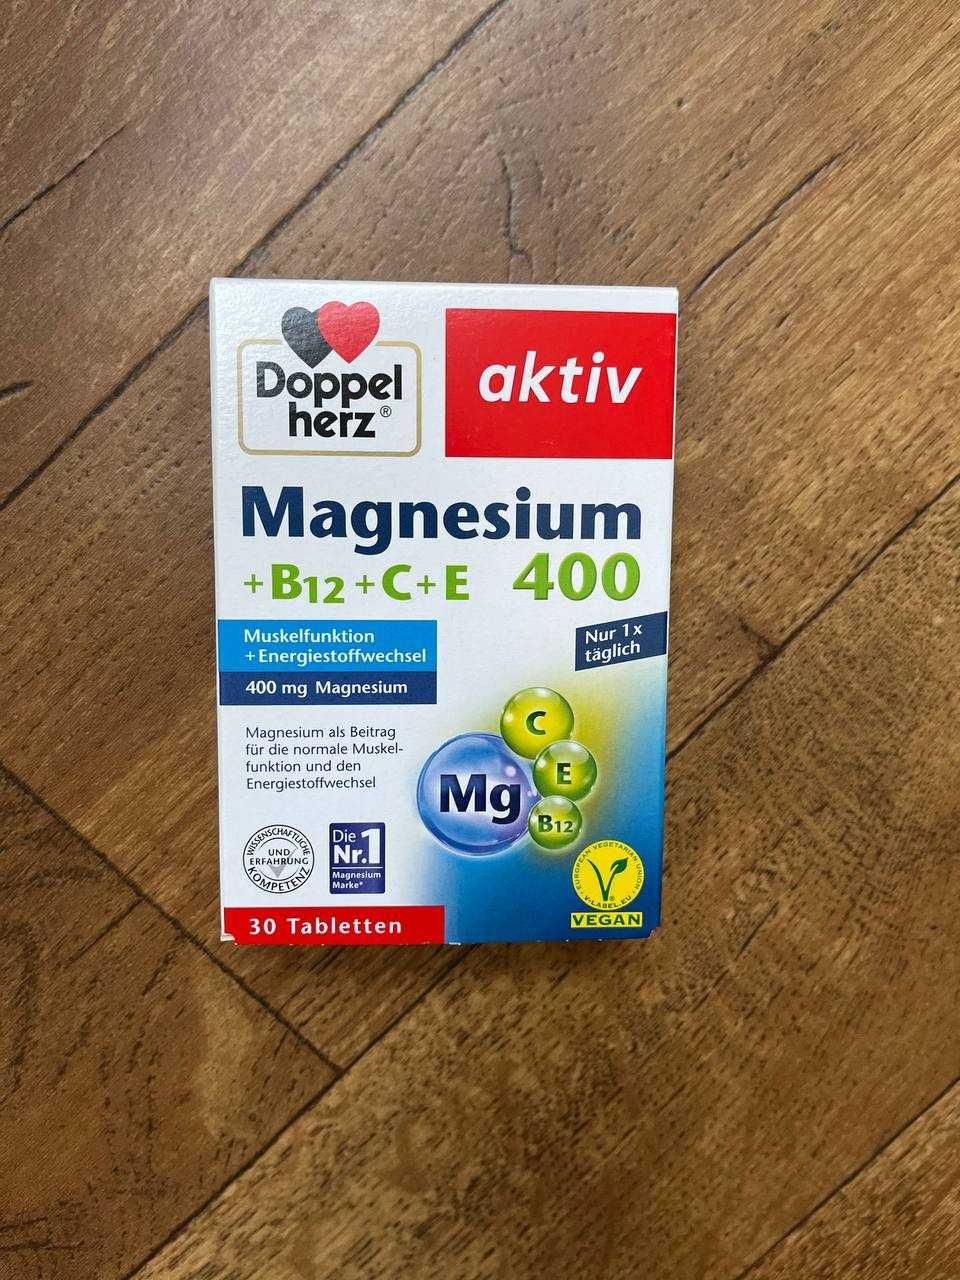 Магний DoppelHerz актив 400 мг + В12 + С + Е (Германия)